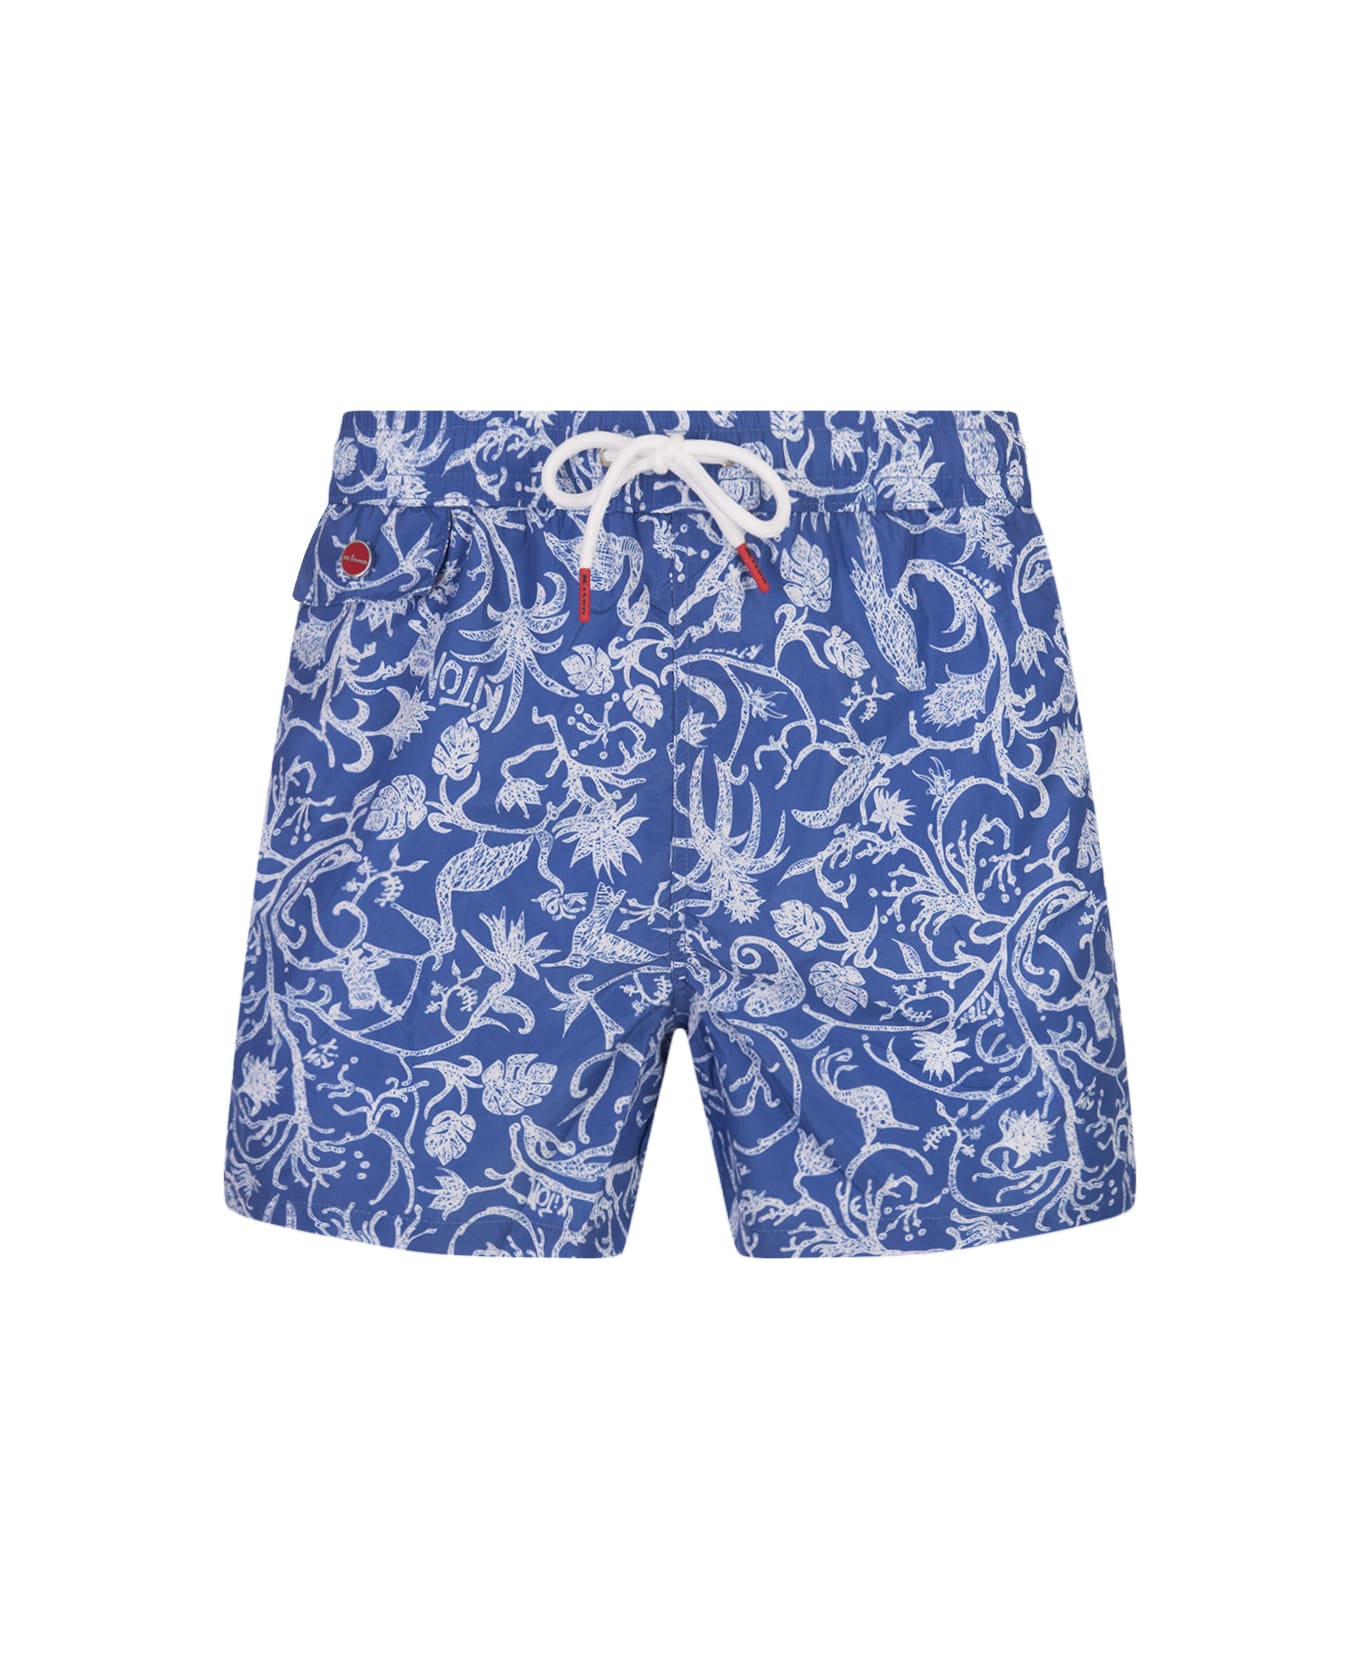 Kiton Blue Swim Shorts With White Fantasy Print - Blue スイムトランクス